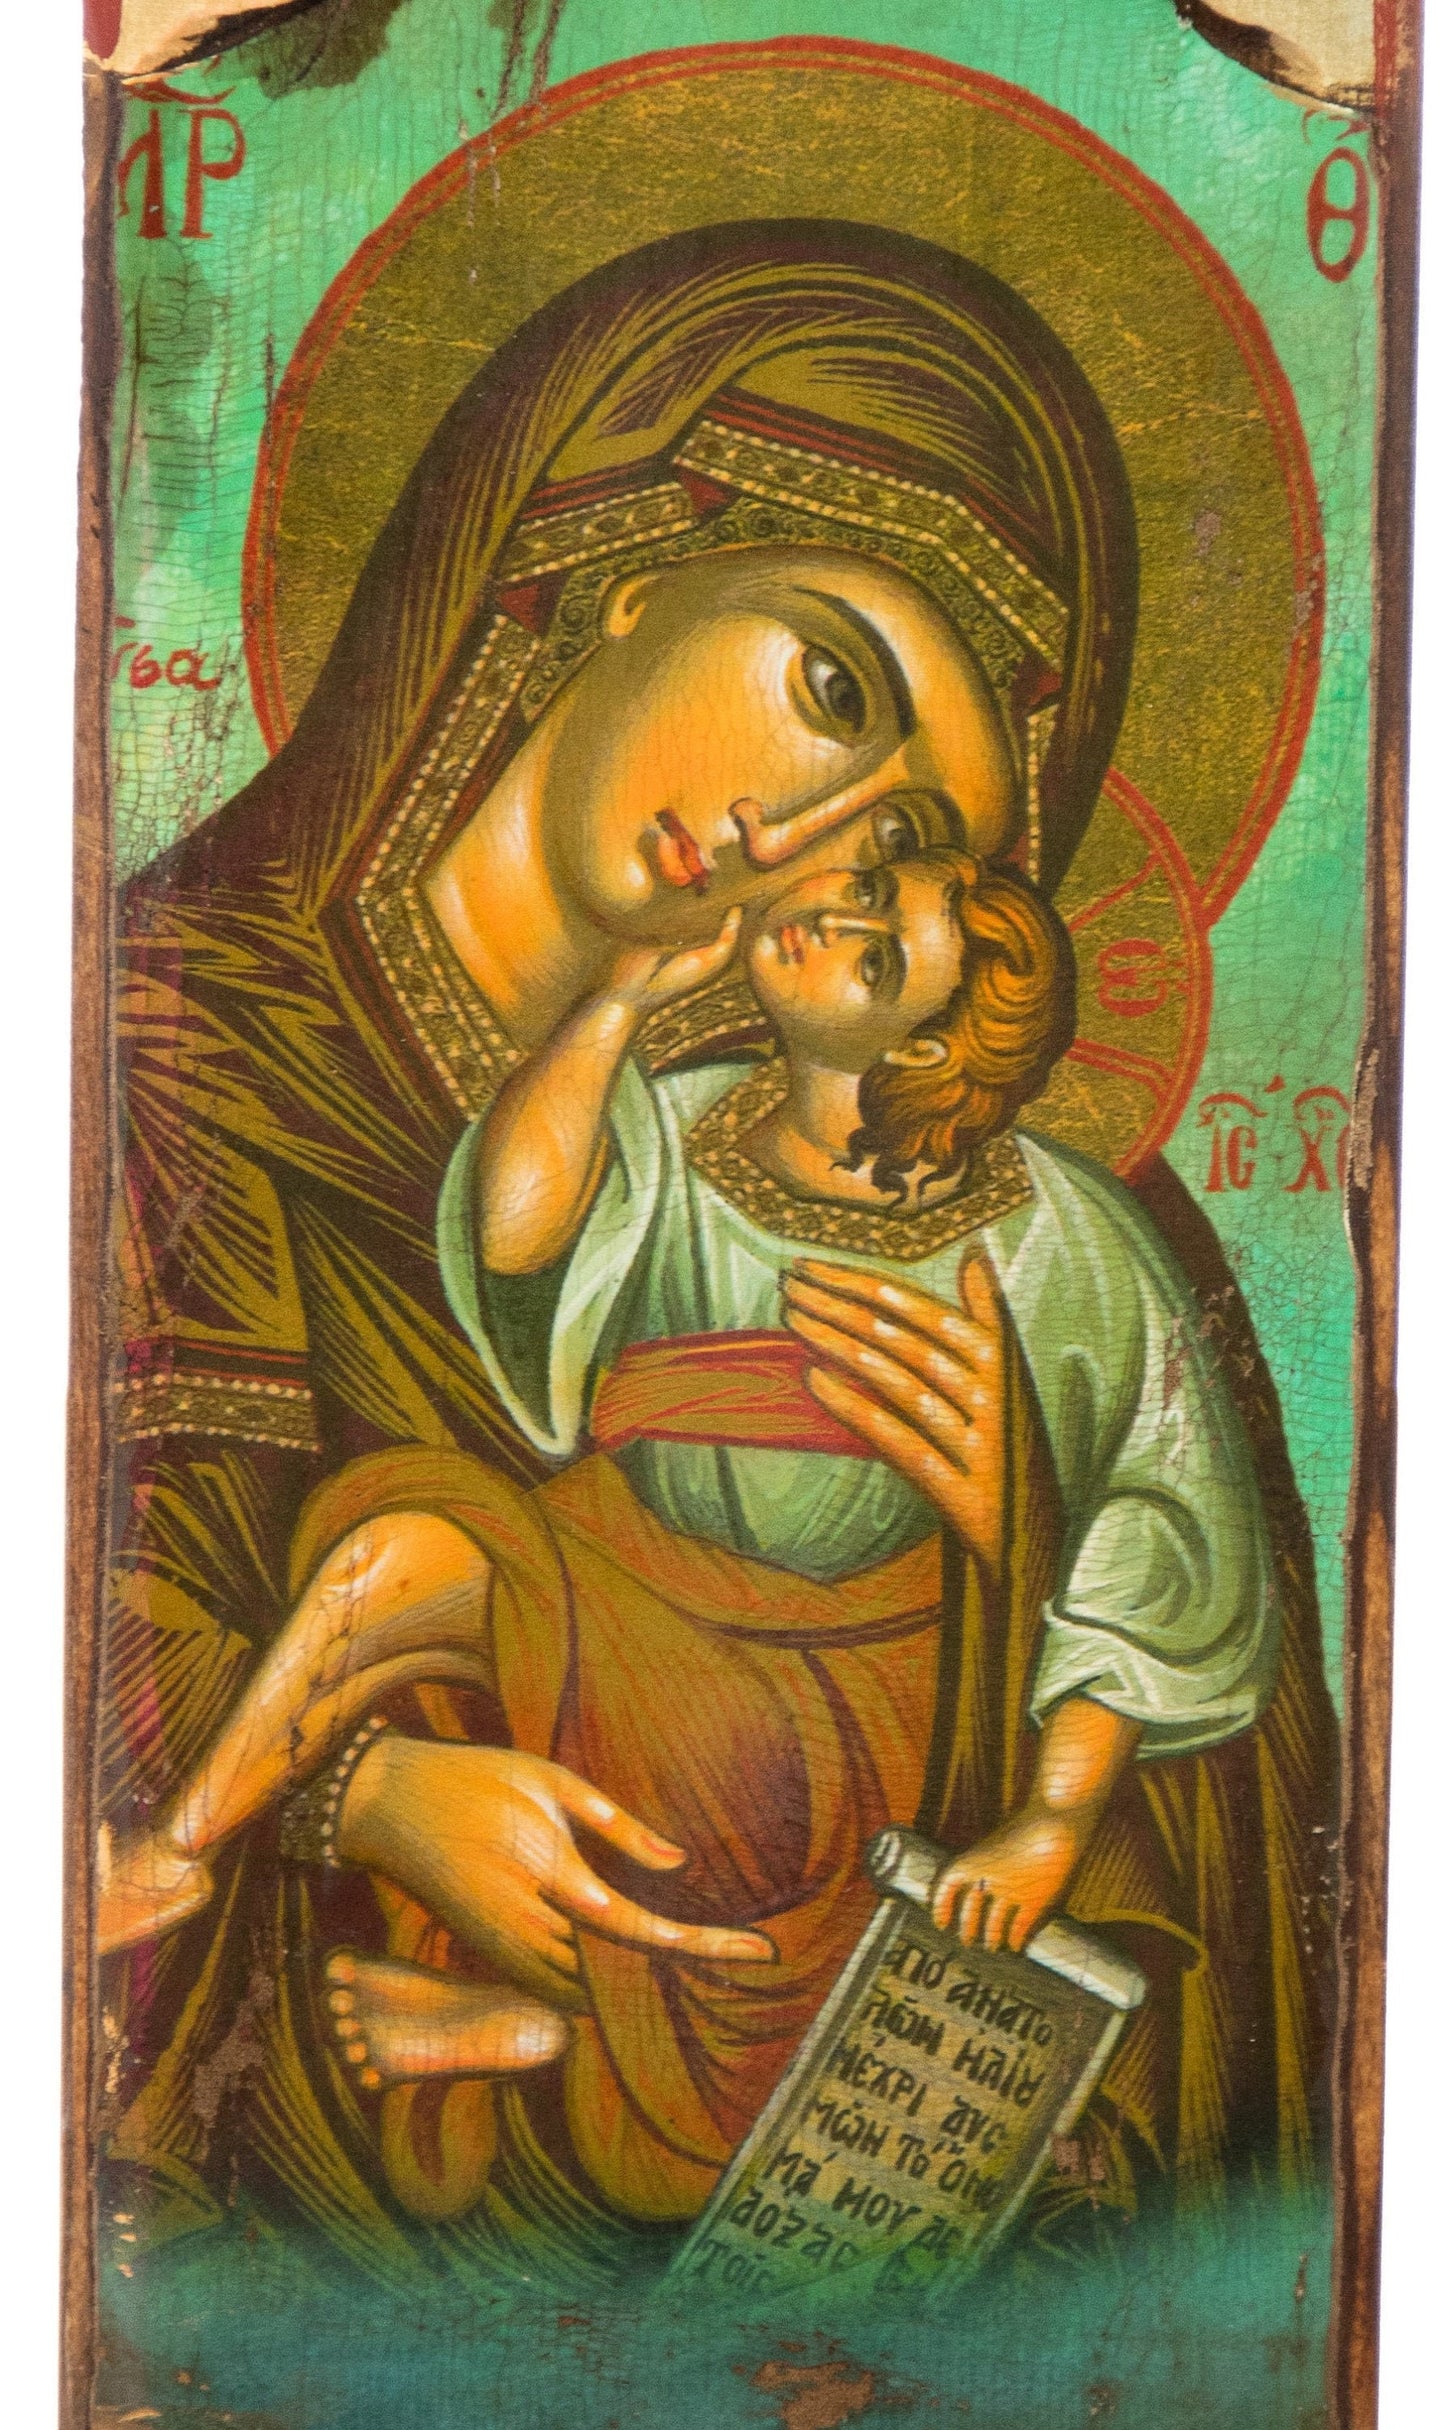 Virgin Mary icon Panagia, Handmade Greek Orthodox icon Theotokos, Mother of God Byzantine art wall hanging wood plaque canvas icon 40x13cm TheHolyArt